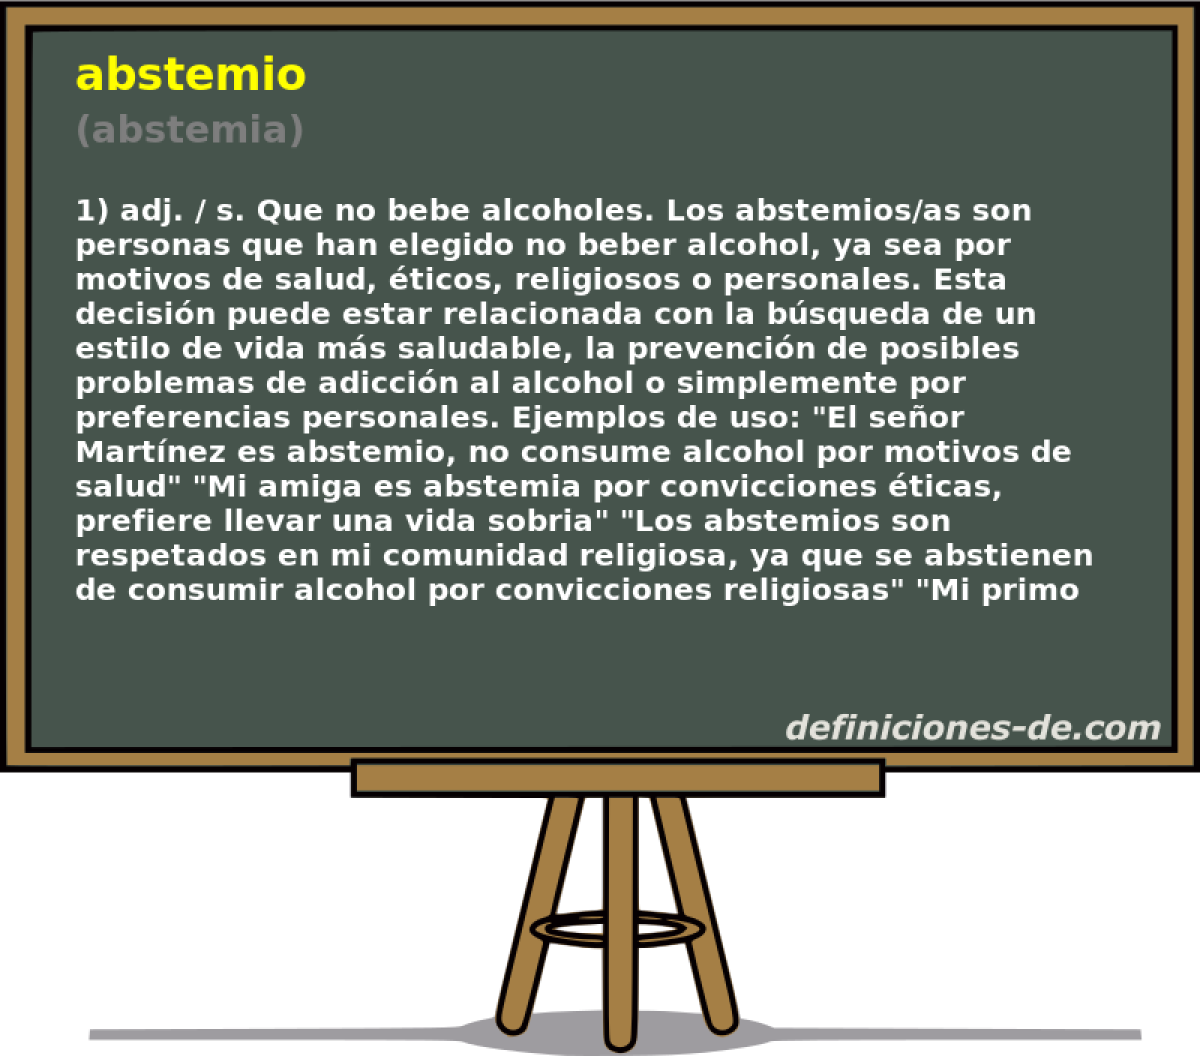 abstemio (abstemia)